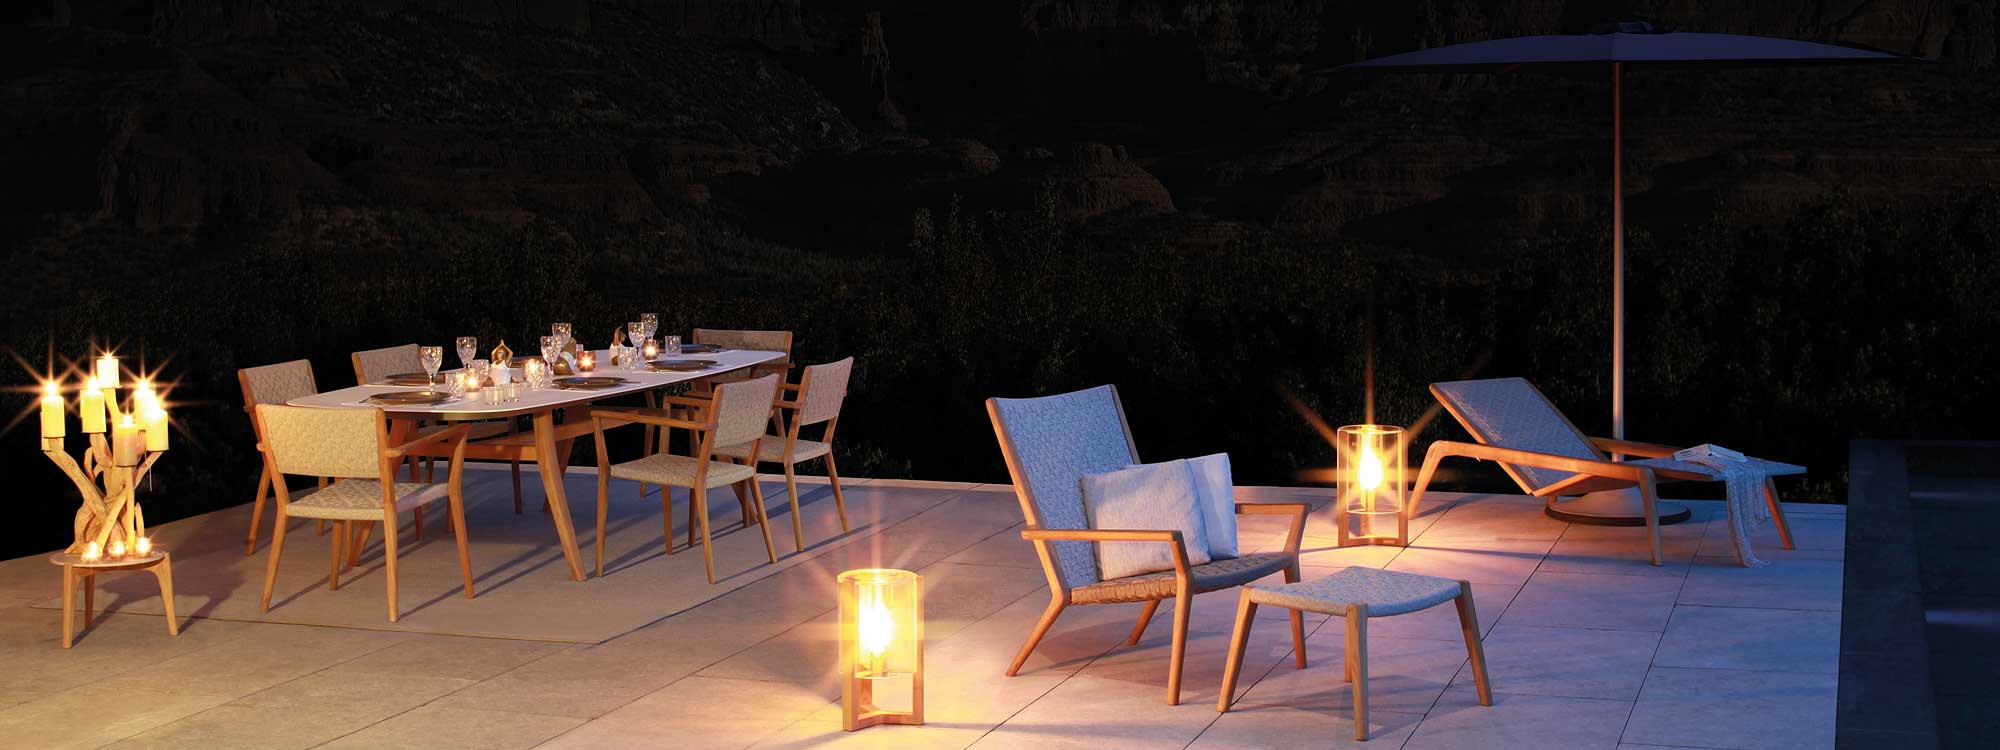 Night time shot of Royal Botania garden furniture on an exterior carpet